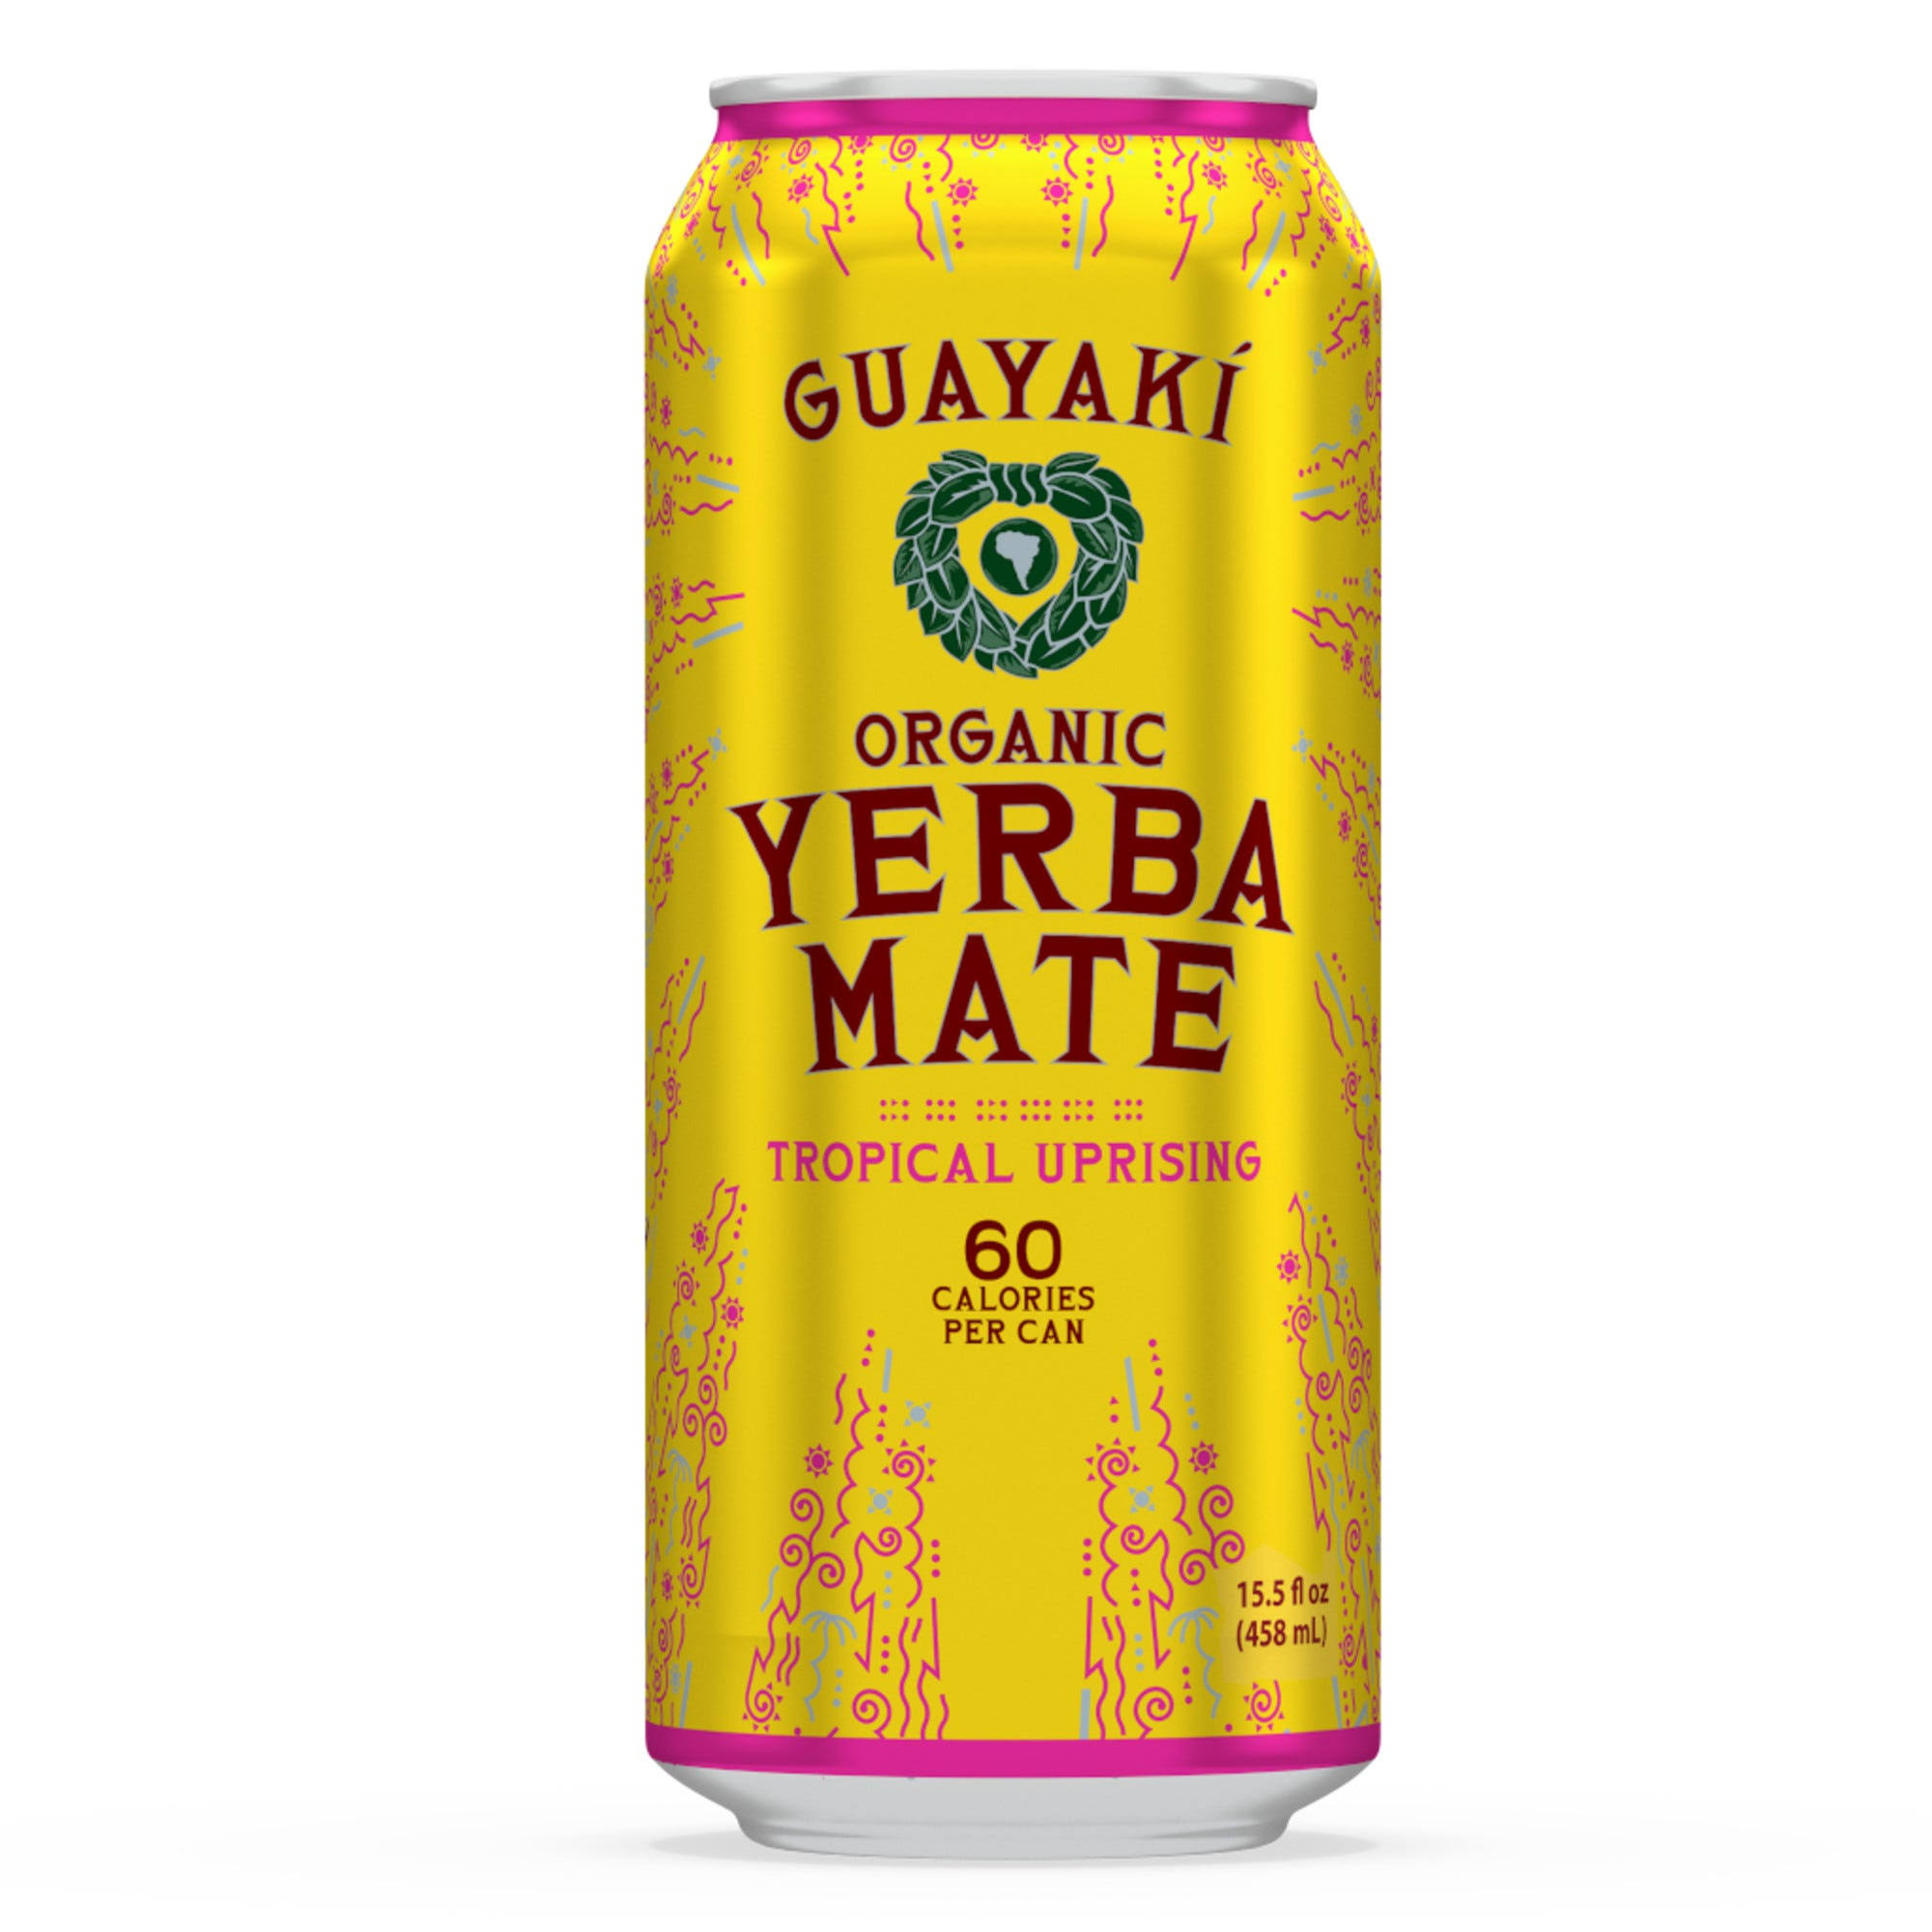 Guayaki Yerba Mate, Organic, Tropical Uprising - 15.5 fl oz